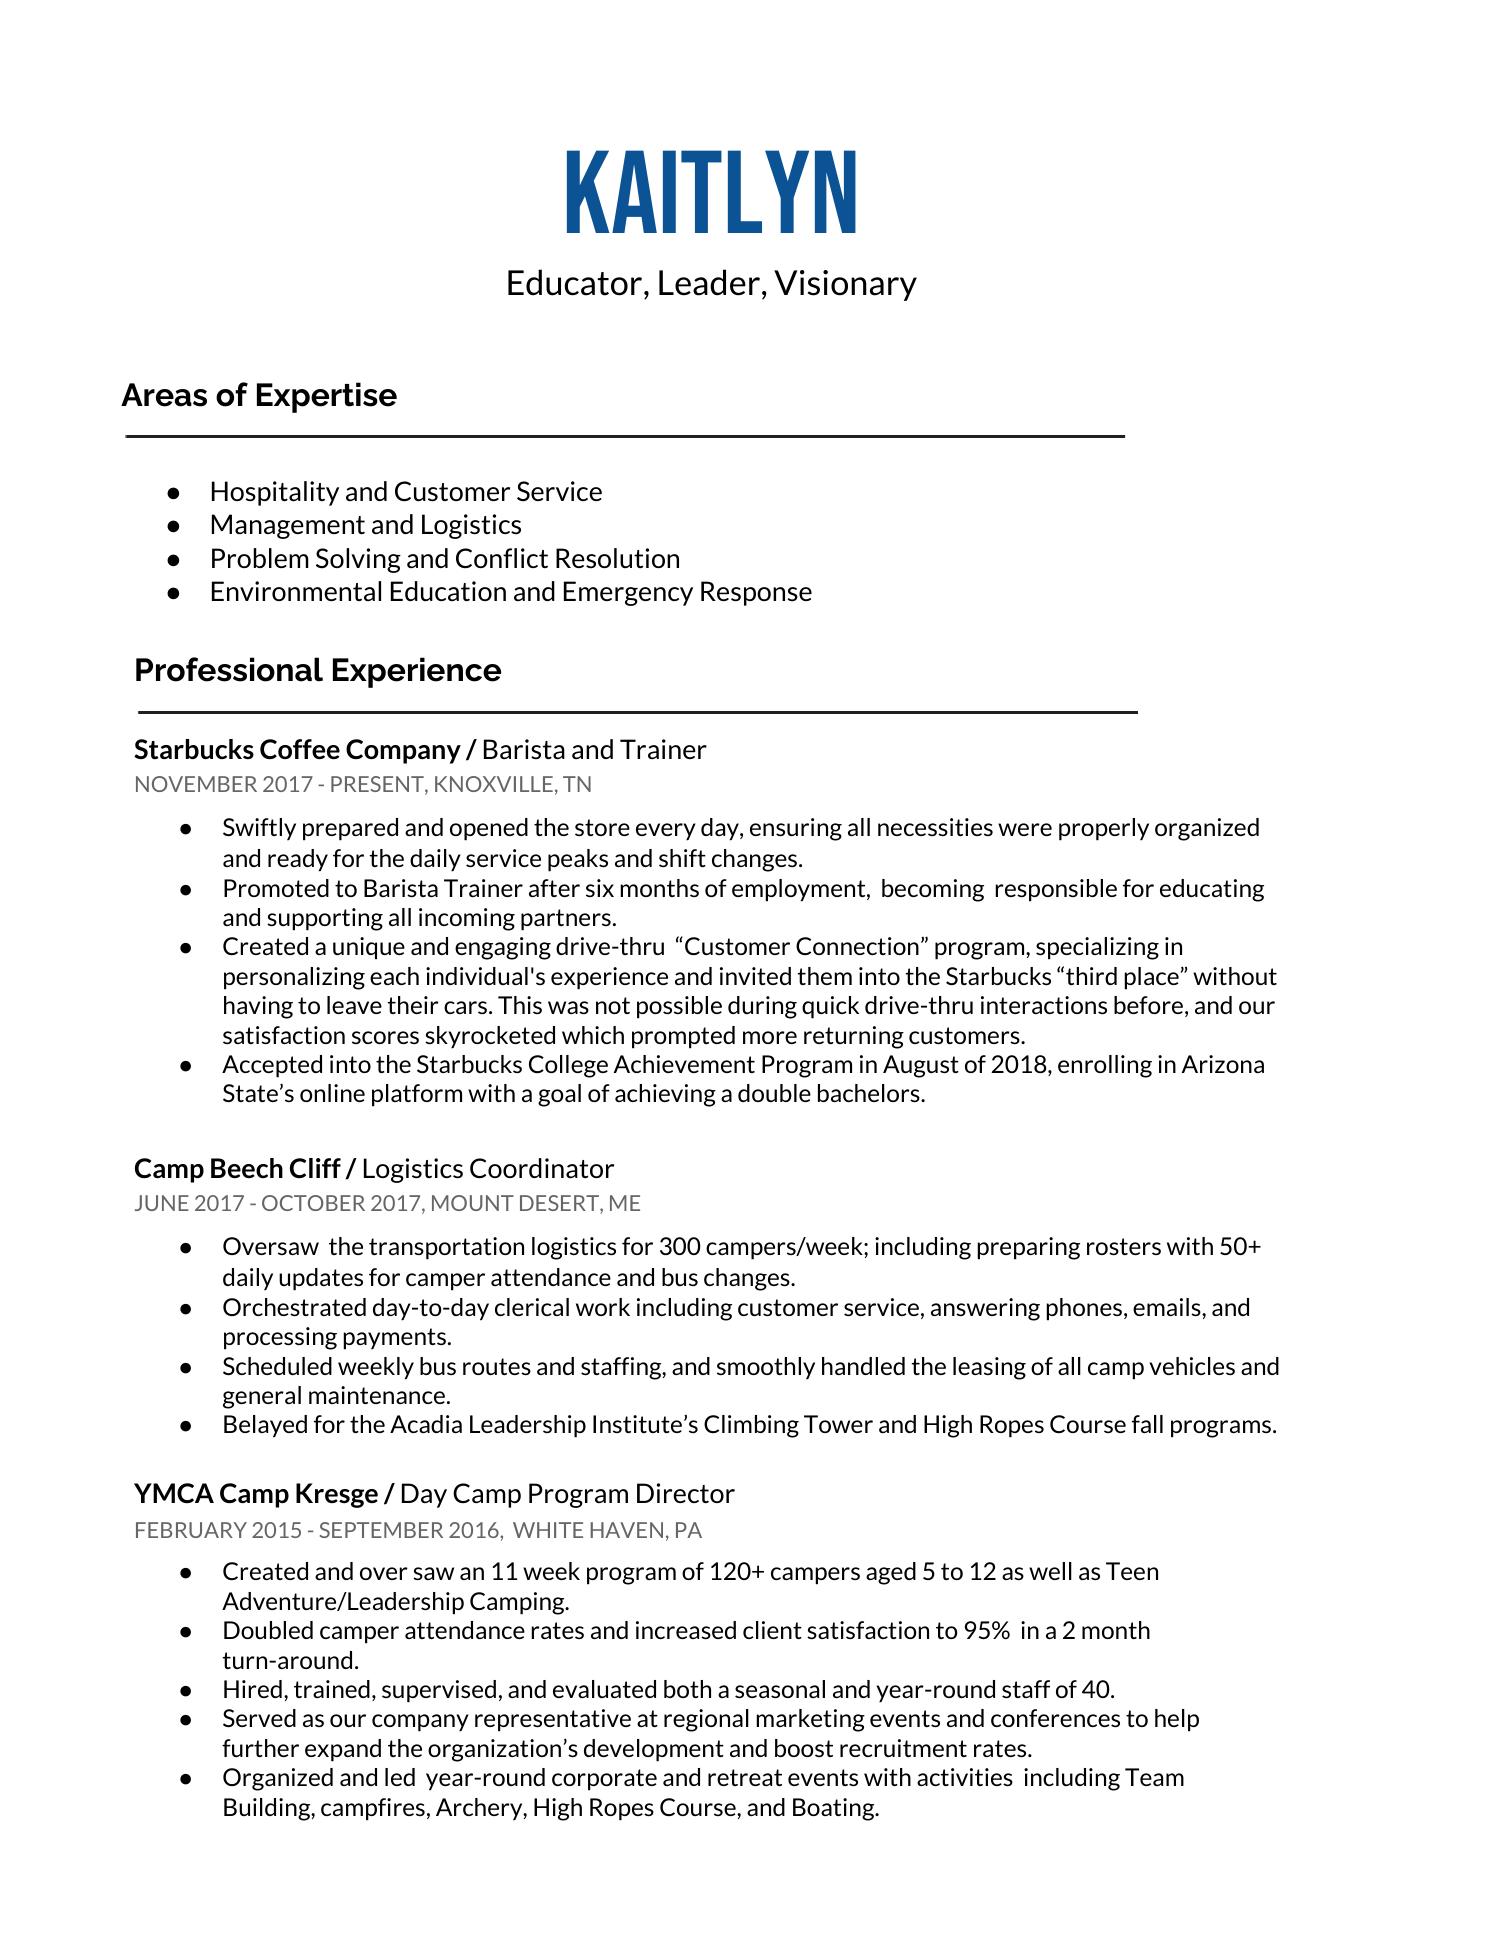 2020 Resume (2).pdf